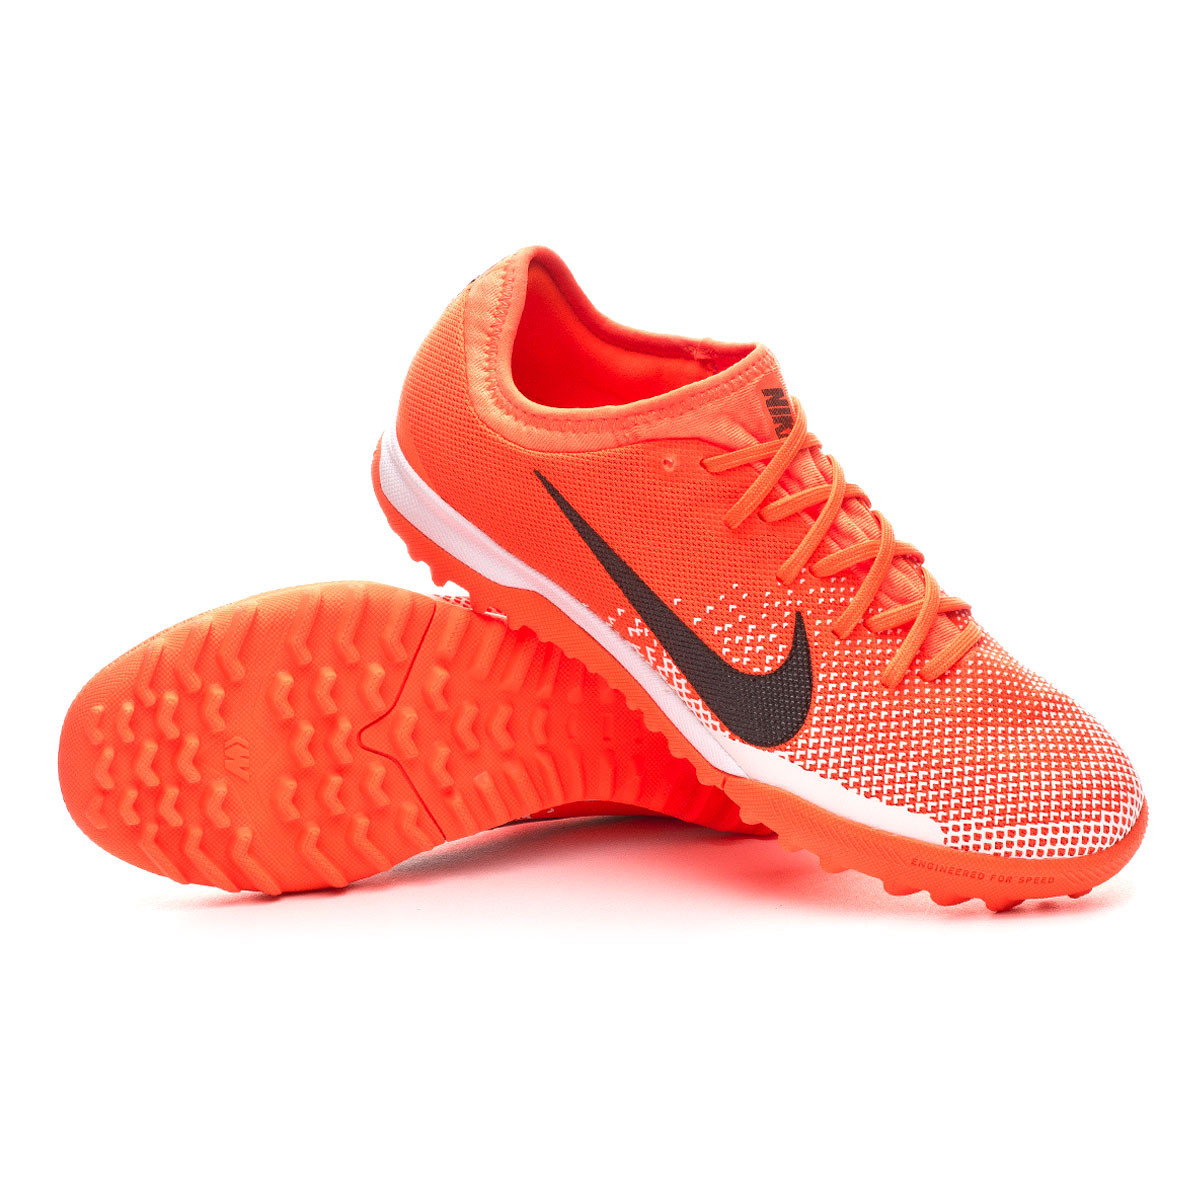 Football Boot Nike Mercurial VaporX XII Pro Turf Hyper crimson-Black-White  - Football store Fútbol Emotion